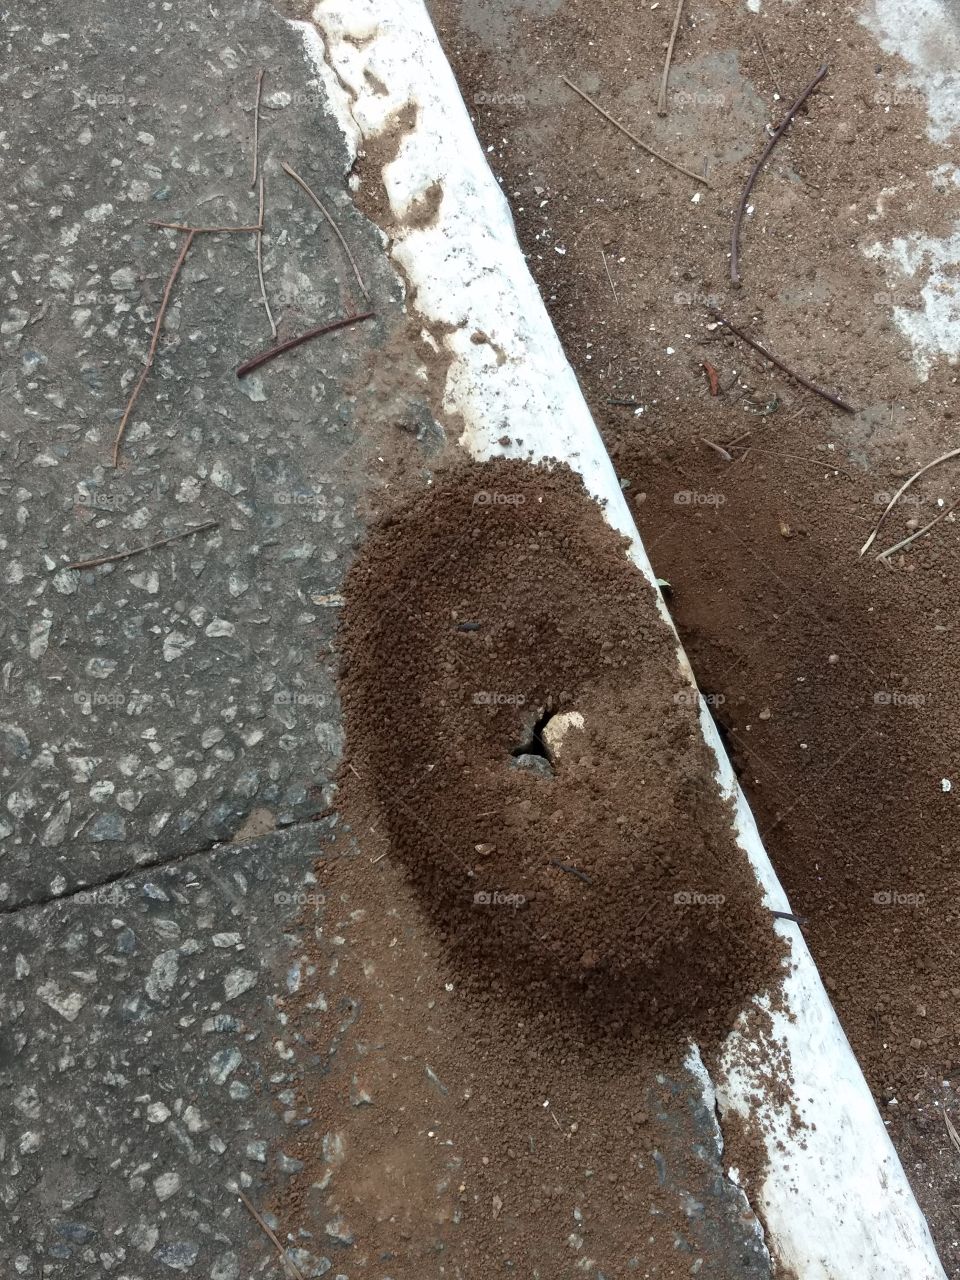 house ant